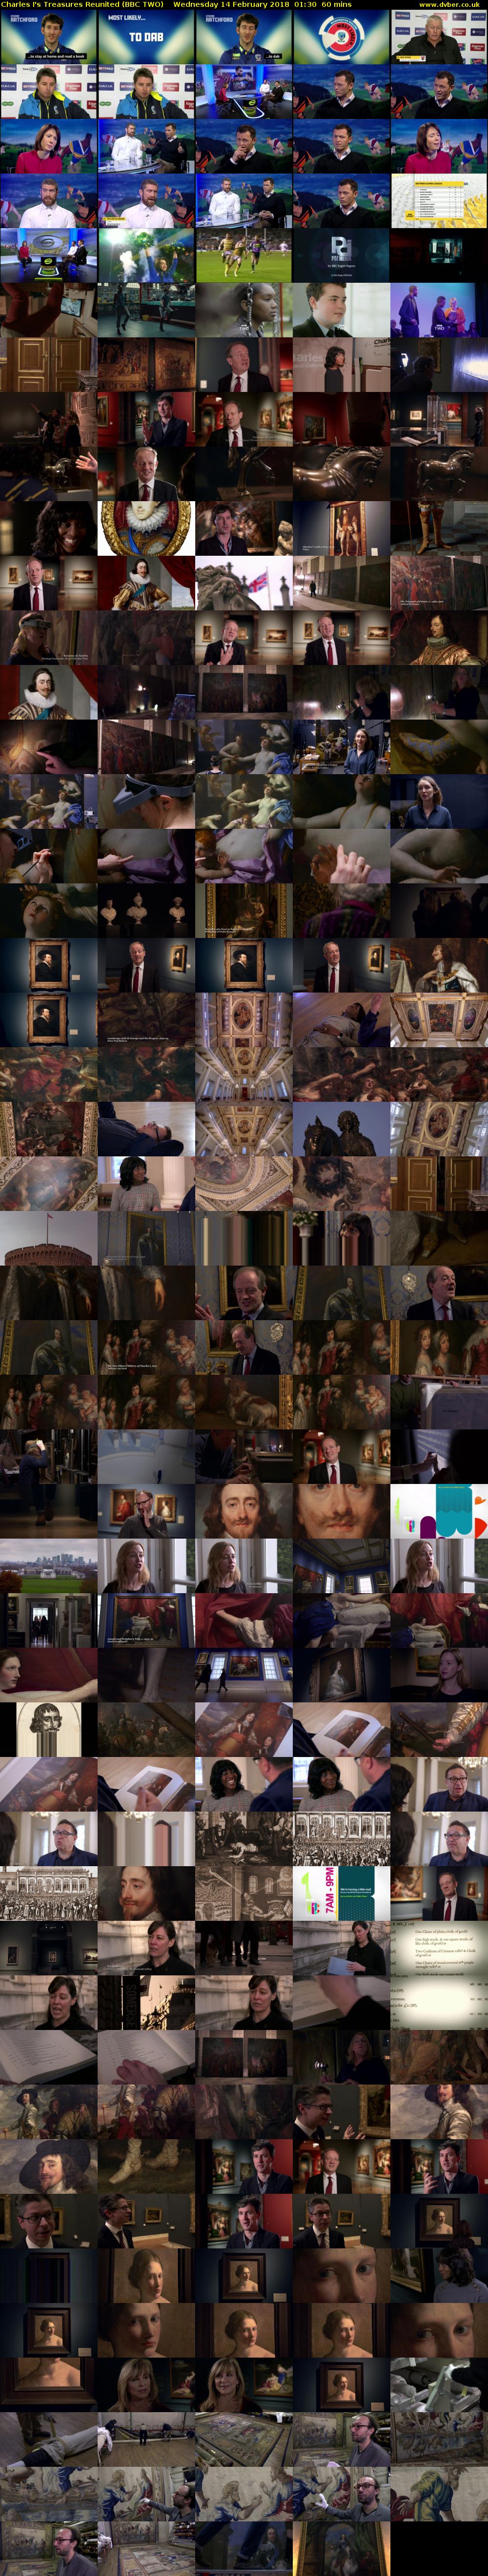 Charles I's Treasures Reunited (BBC TWO) Wednesday 14 February 2018 01:30 - 02:30